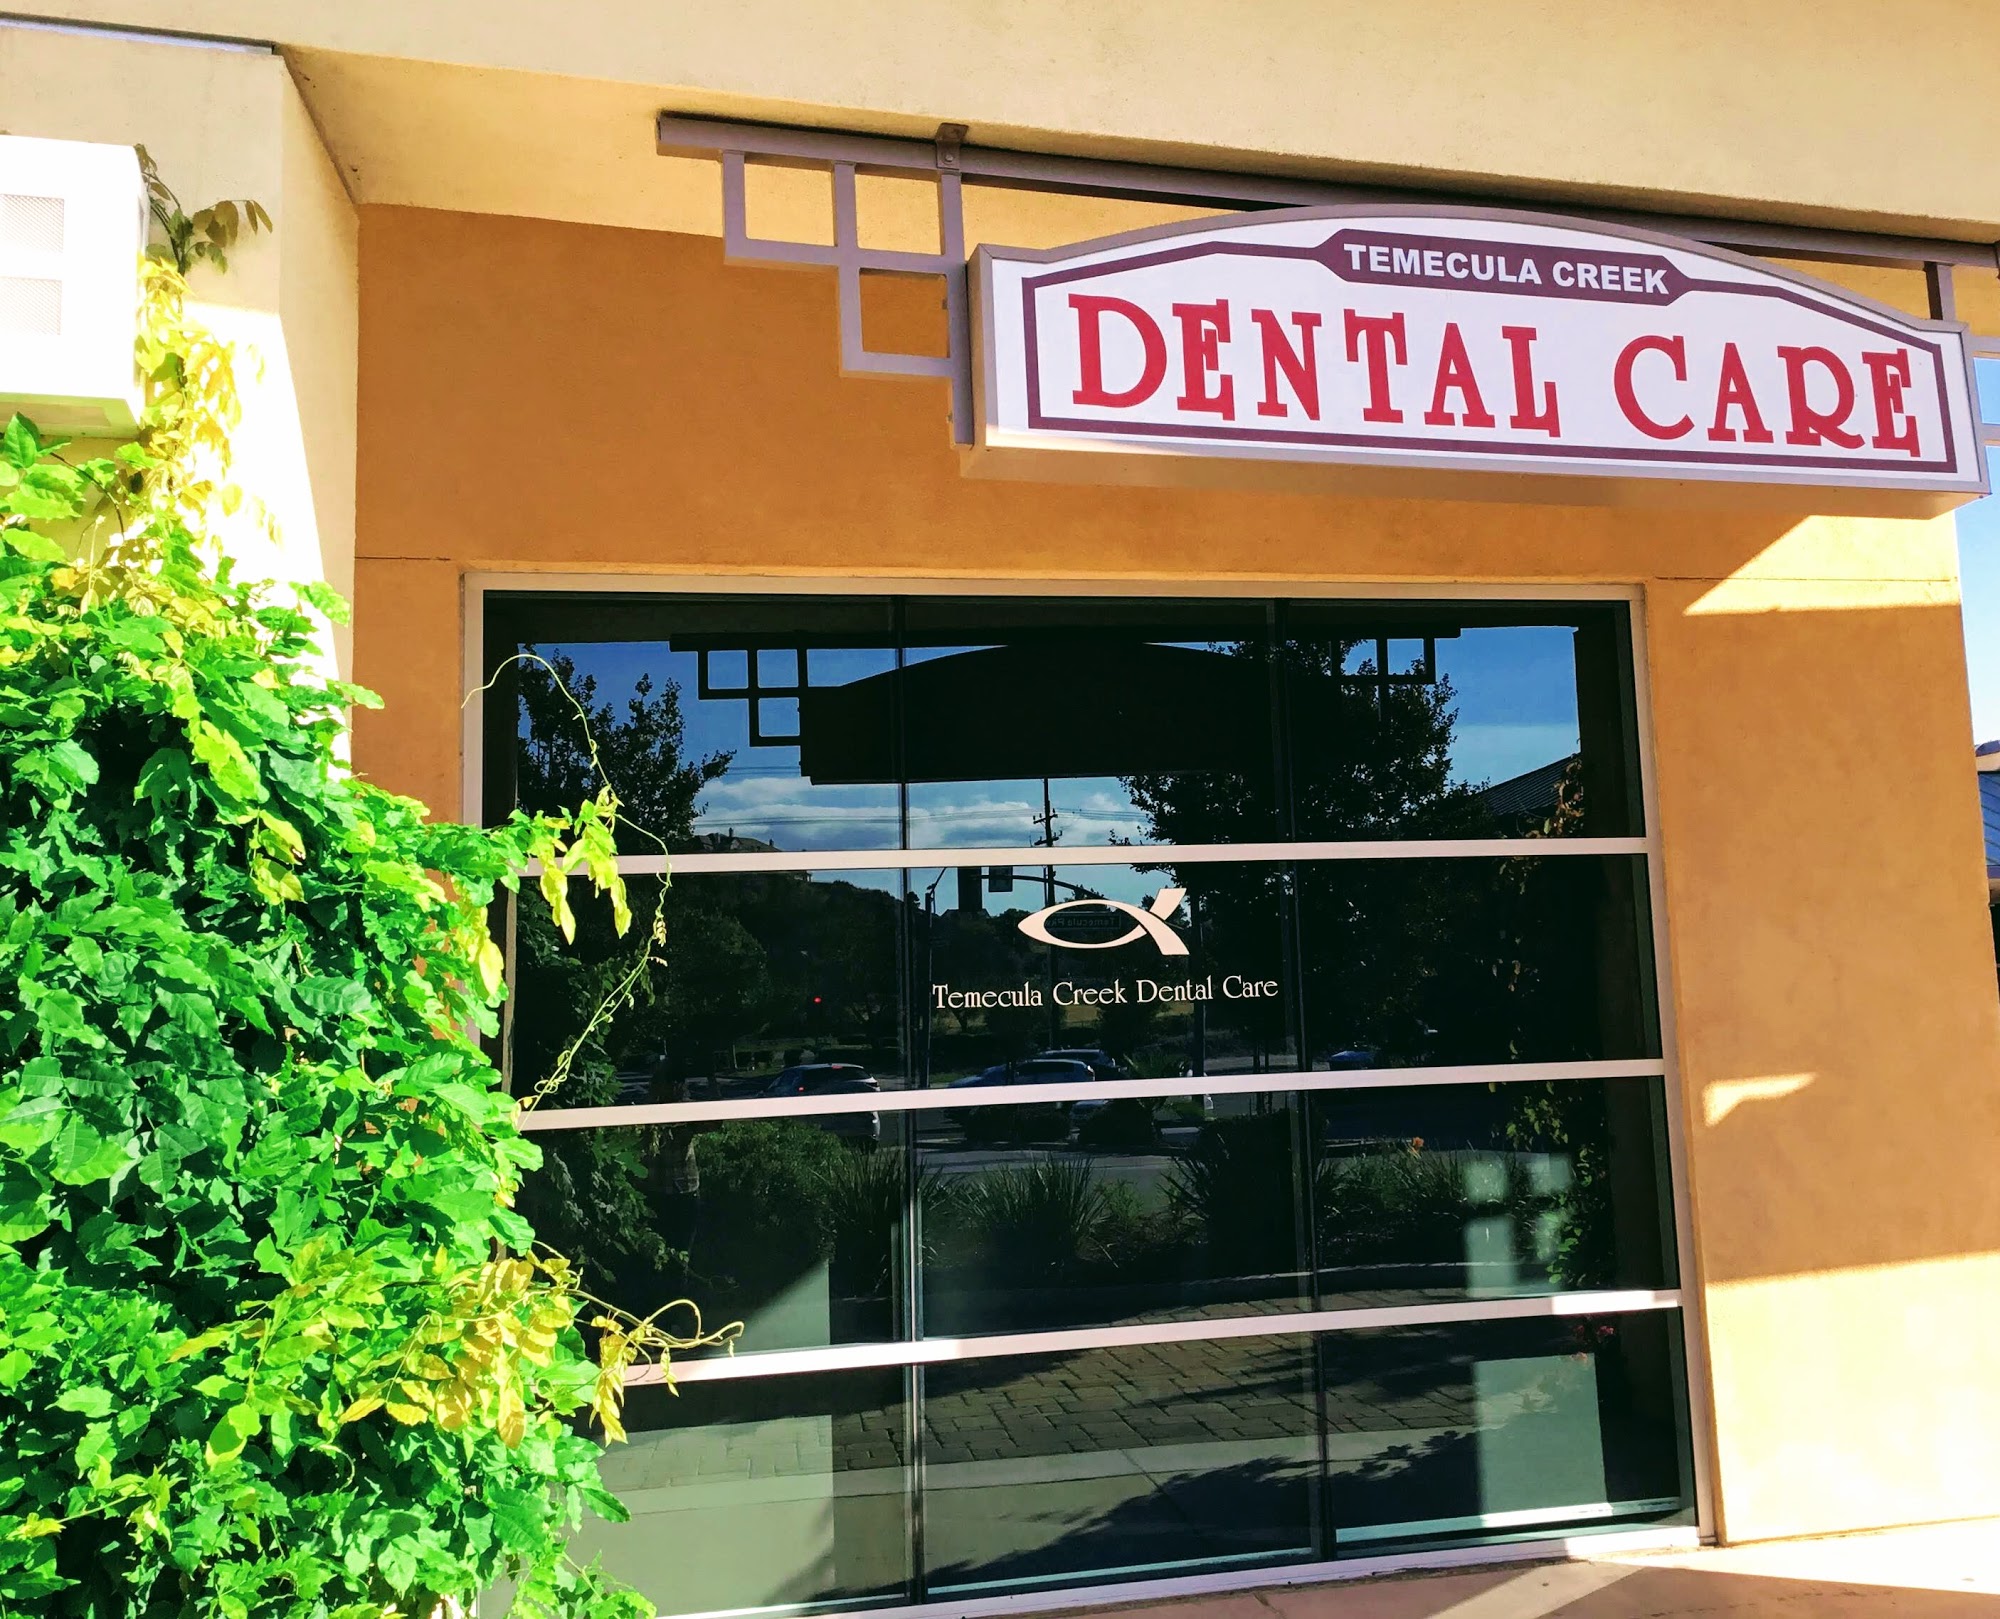 Temecula Creek Dental Care